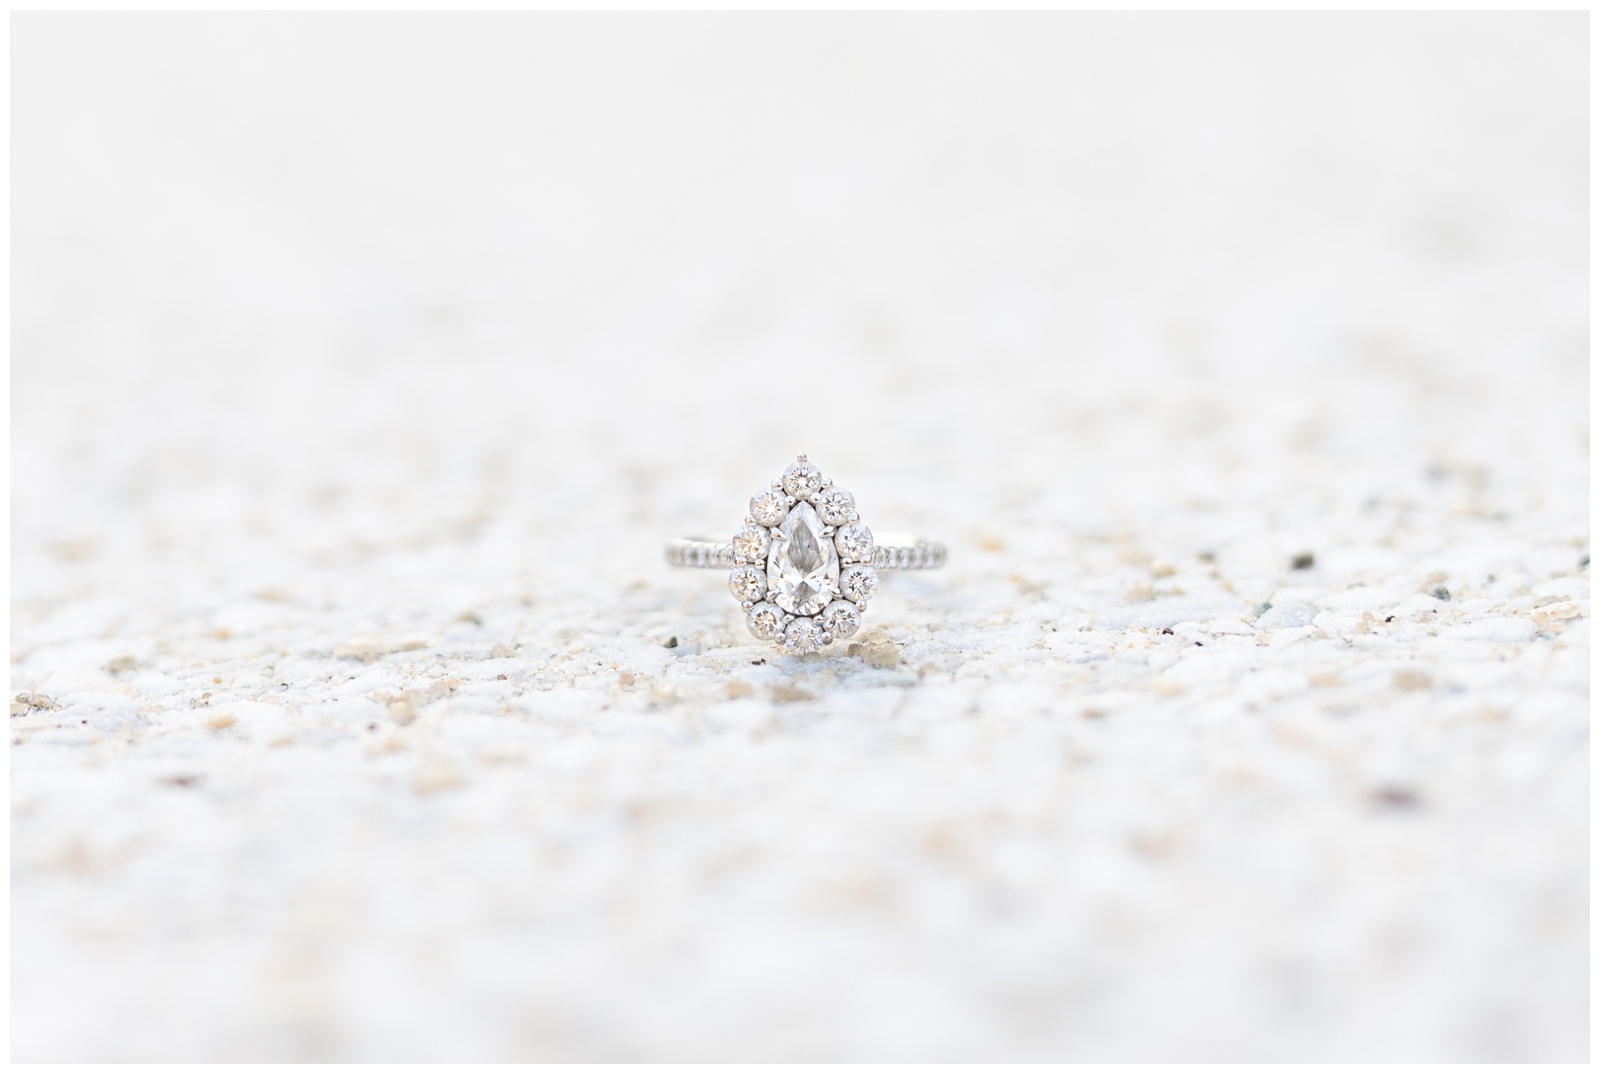 Marquise shaped diamond engagement ring